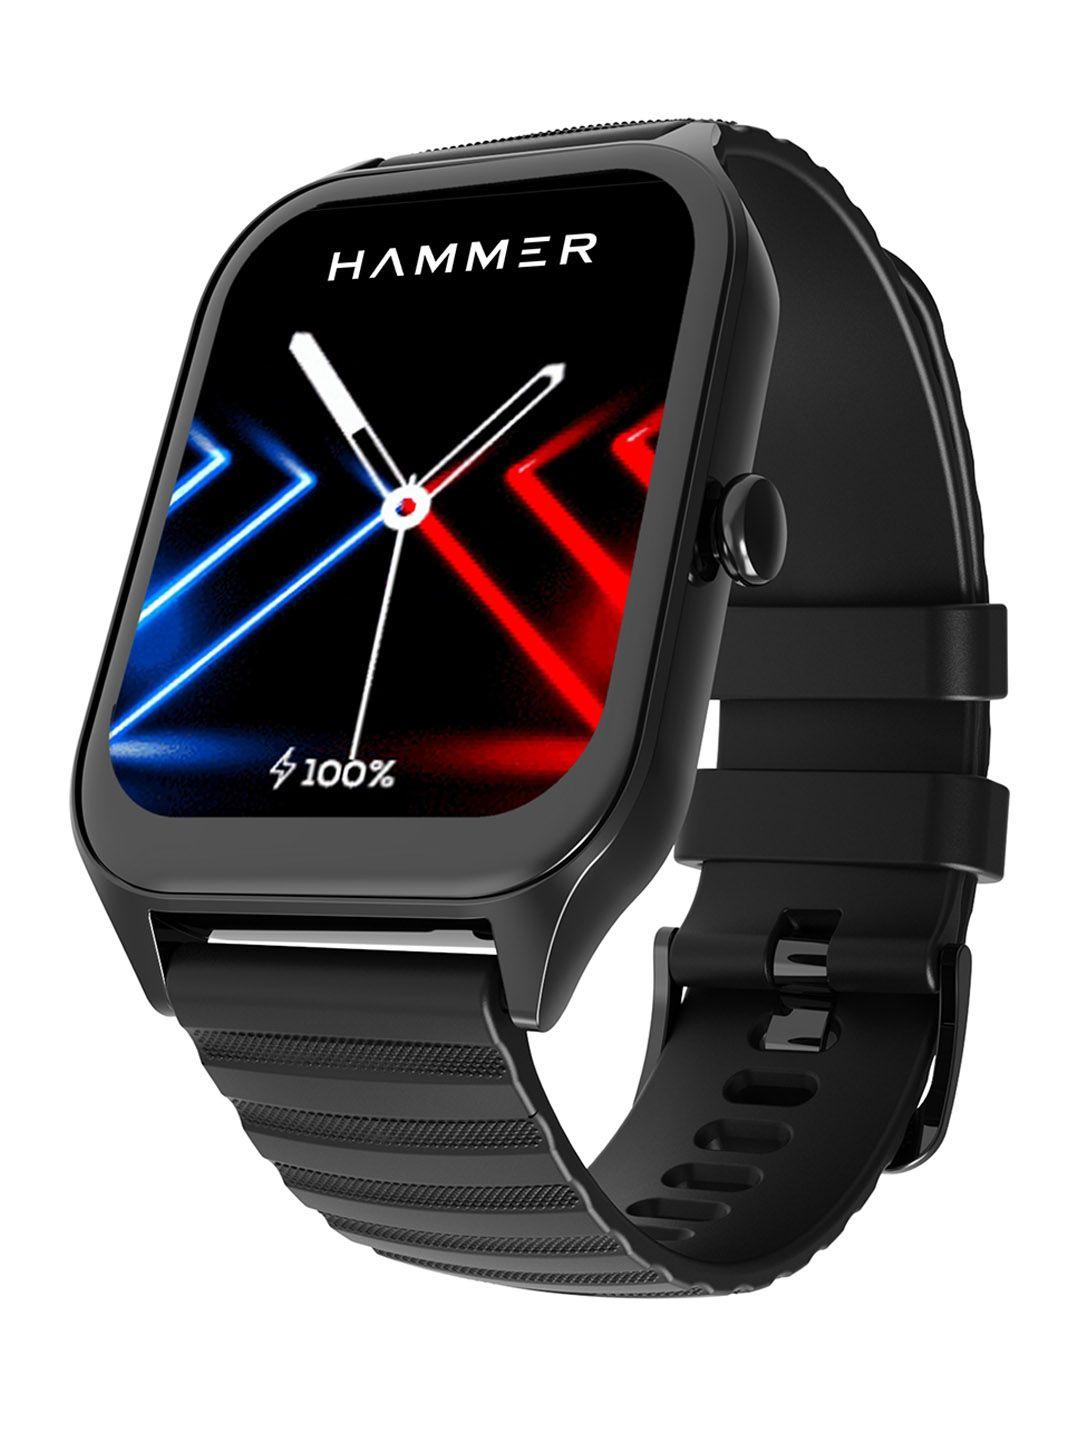 hammer stroke 1.96" tft display calling smart watch with strong metallic body smart watch